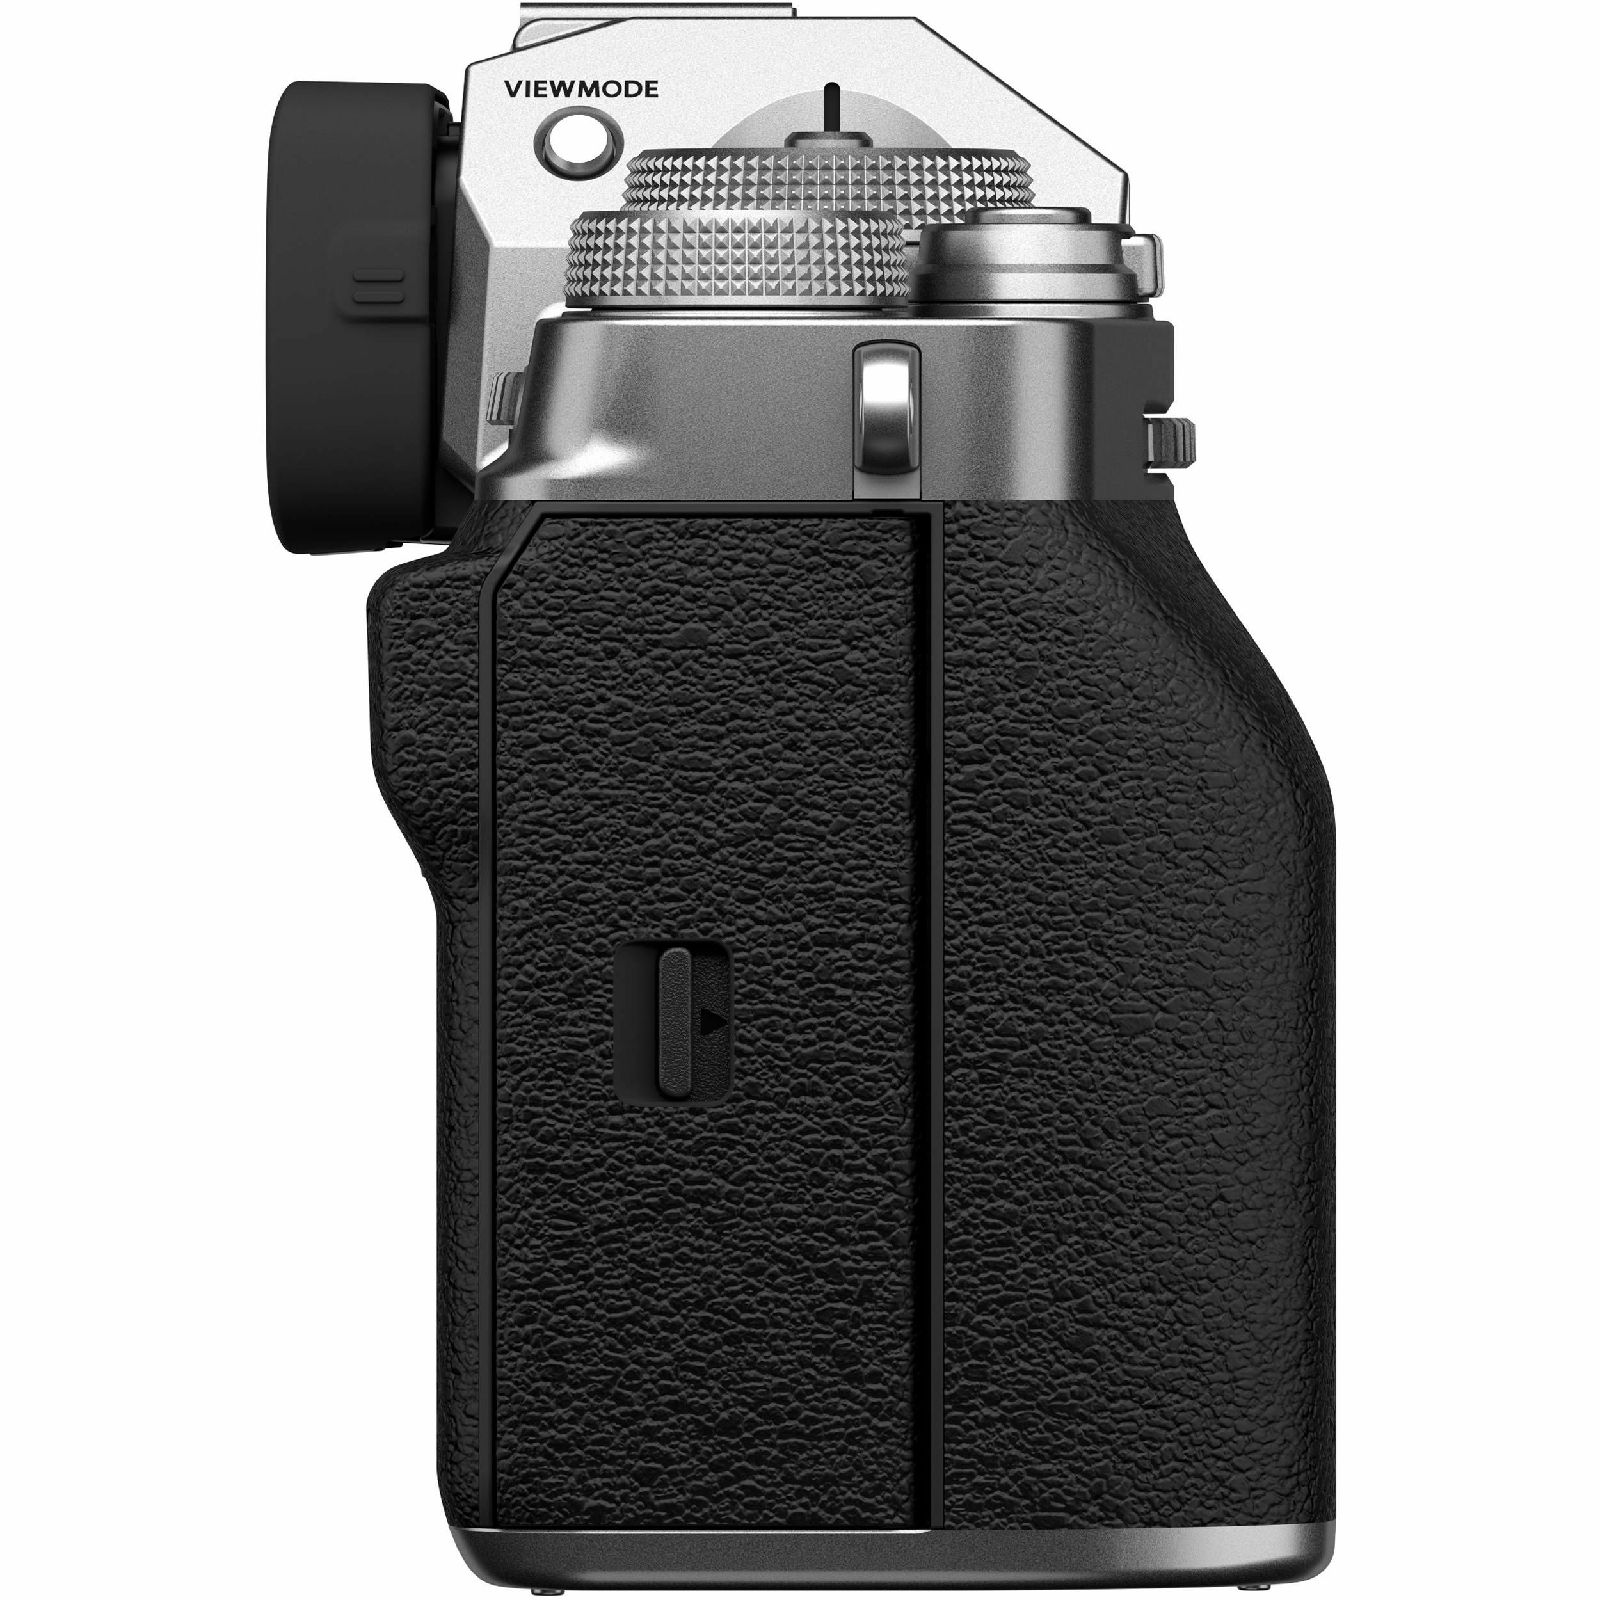 Fujifilm X-T4 Body Silver srebreni Fuji digitalni fotoaparat Mirrorless camera (16650601)